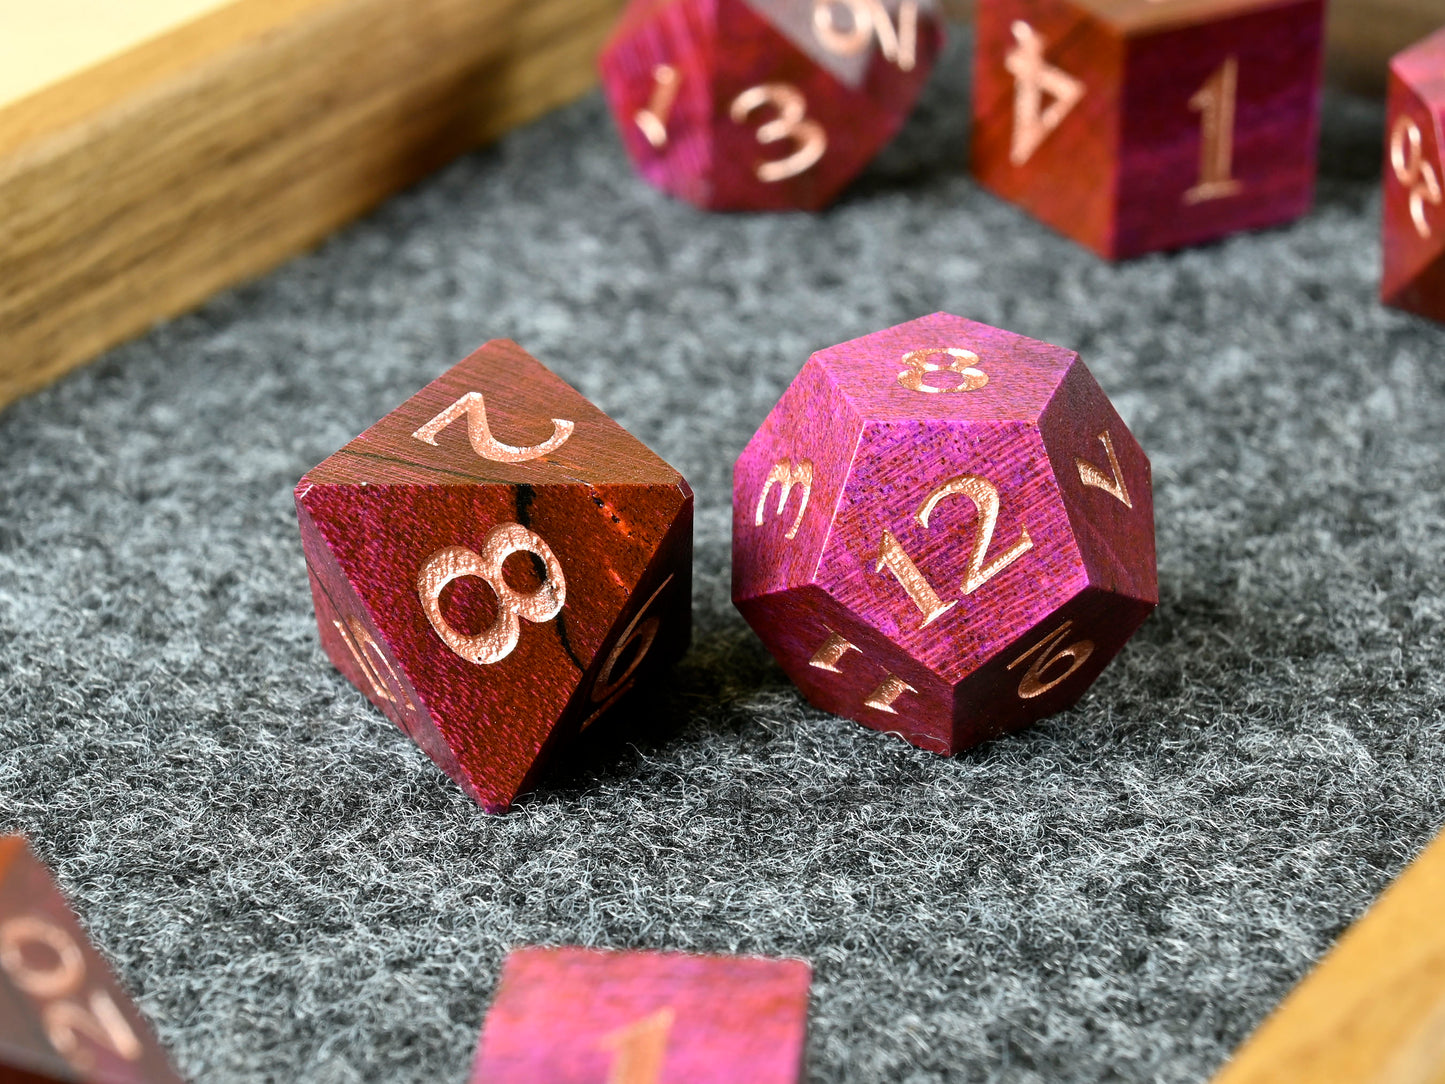 Pink Spalted Maple wood dice set for dnd tttrpg